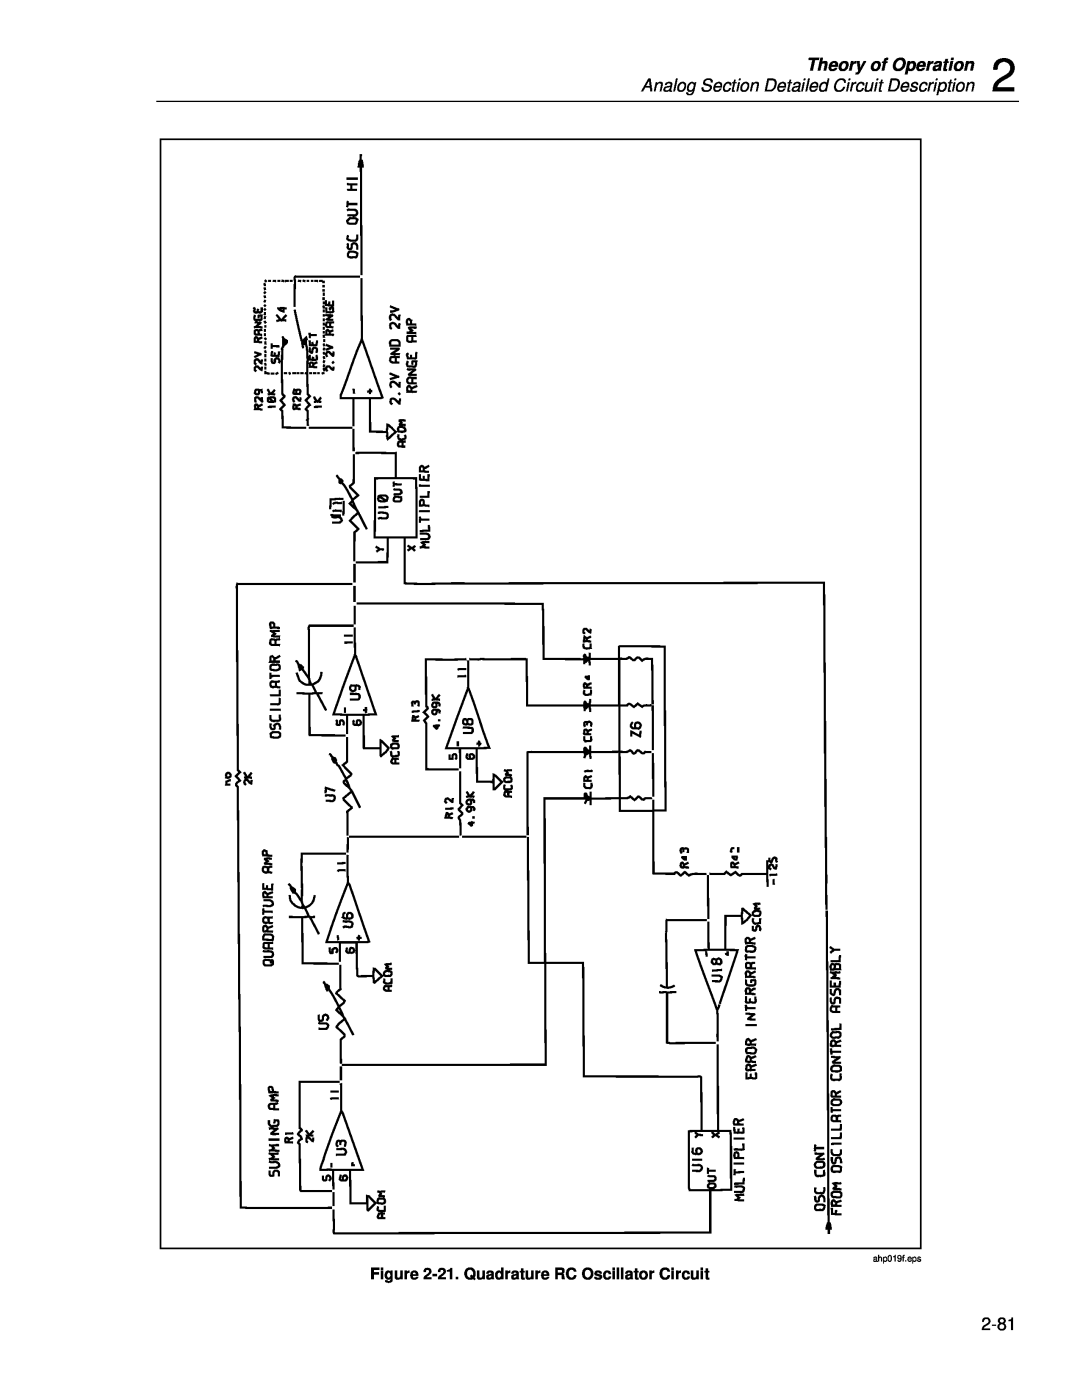 Fluke 5720A Theory of Operation, Analog Section Detailed Circuit Description, 21. Quadrature RC Oscillator Circuit 